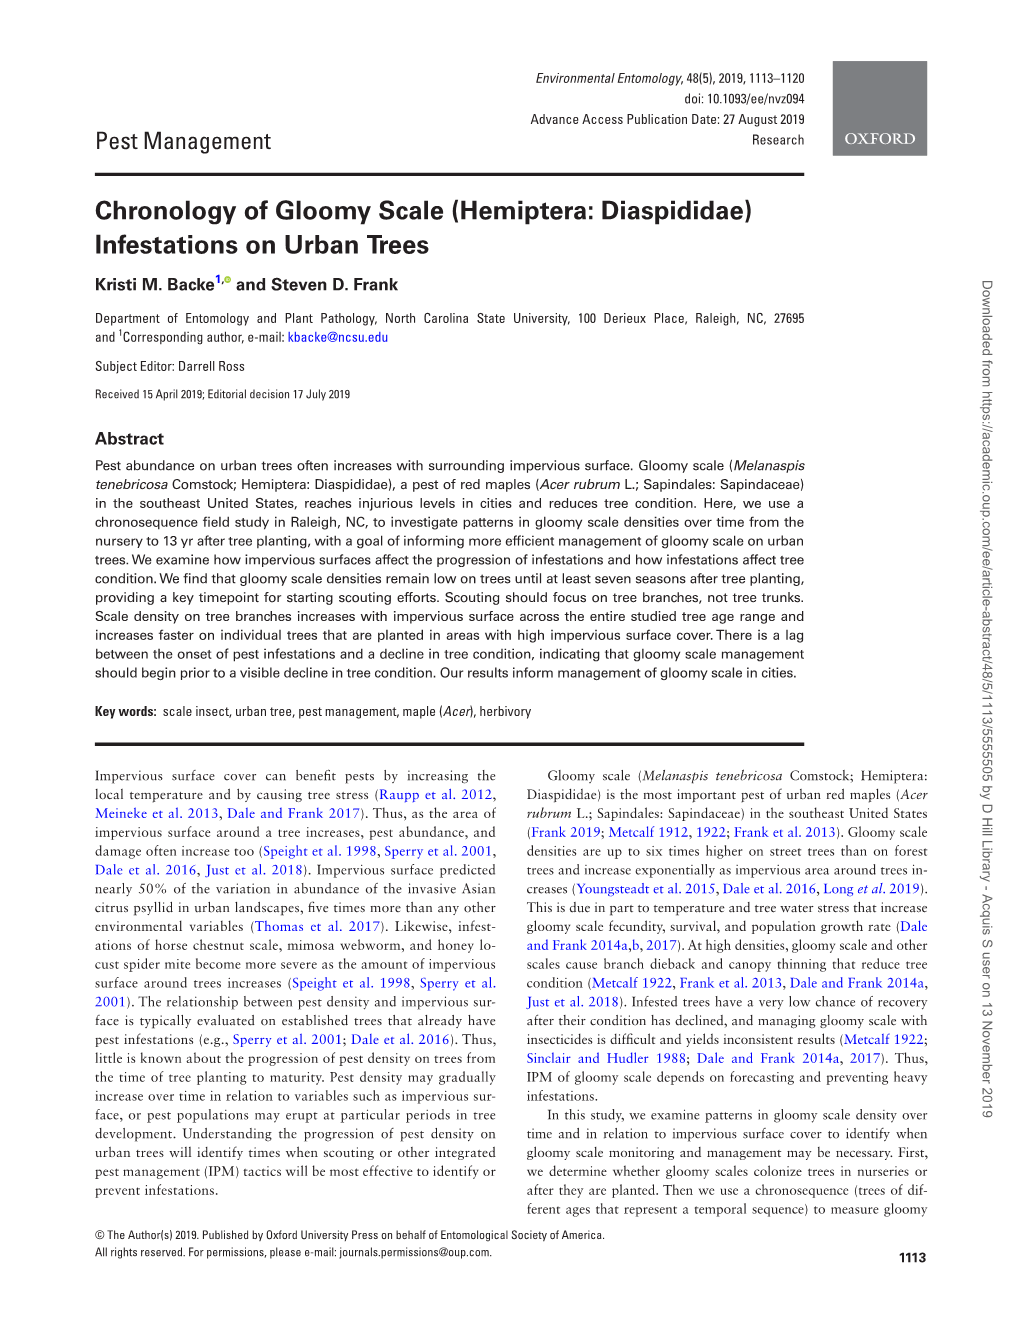 Chronology of Gloomy Scale (Hemiptera: Diaspididae) Infestations on Urban Trees